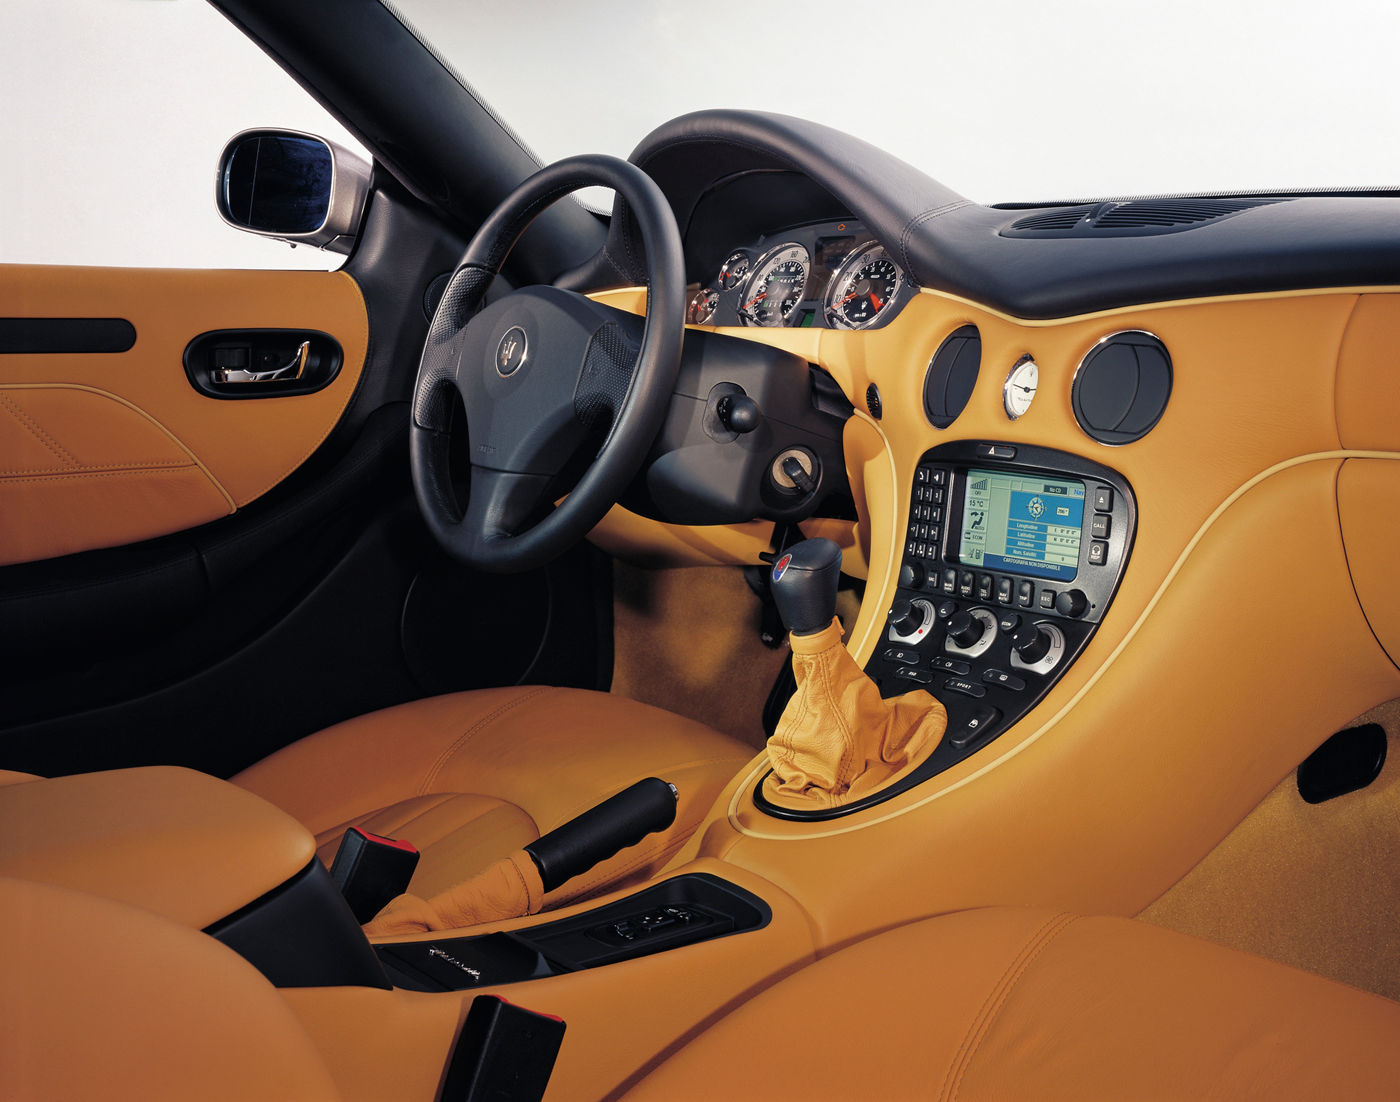 2002 Maserati GranTurismo Coupe - interior details view